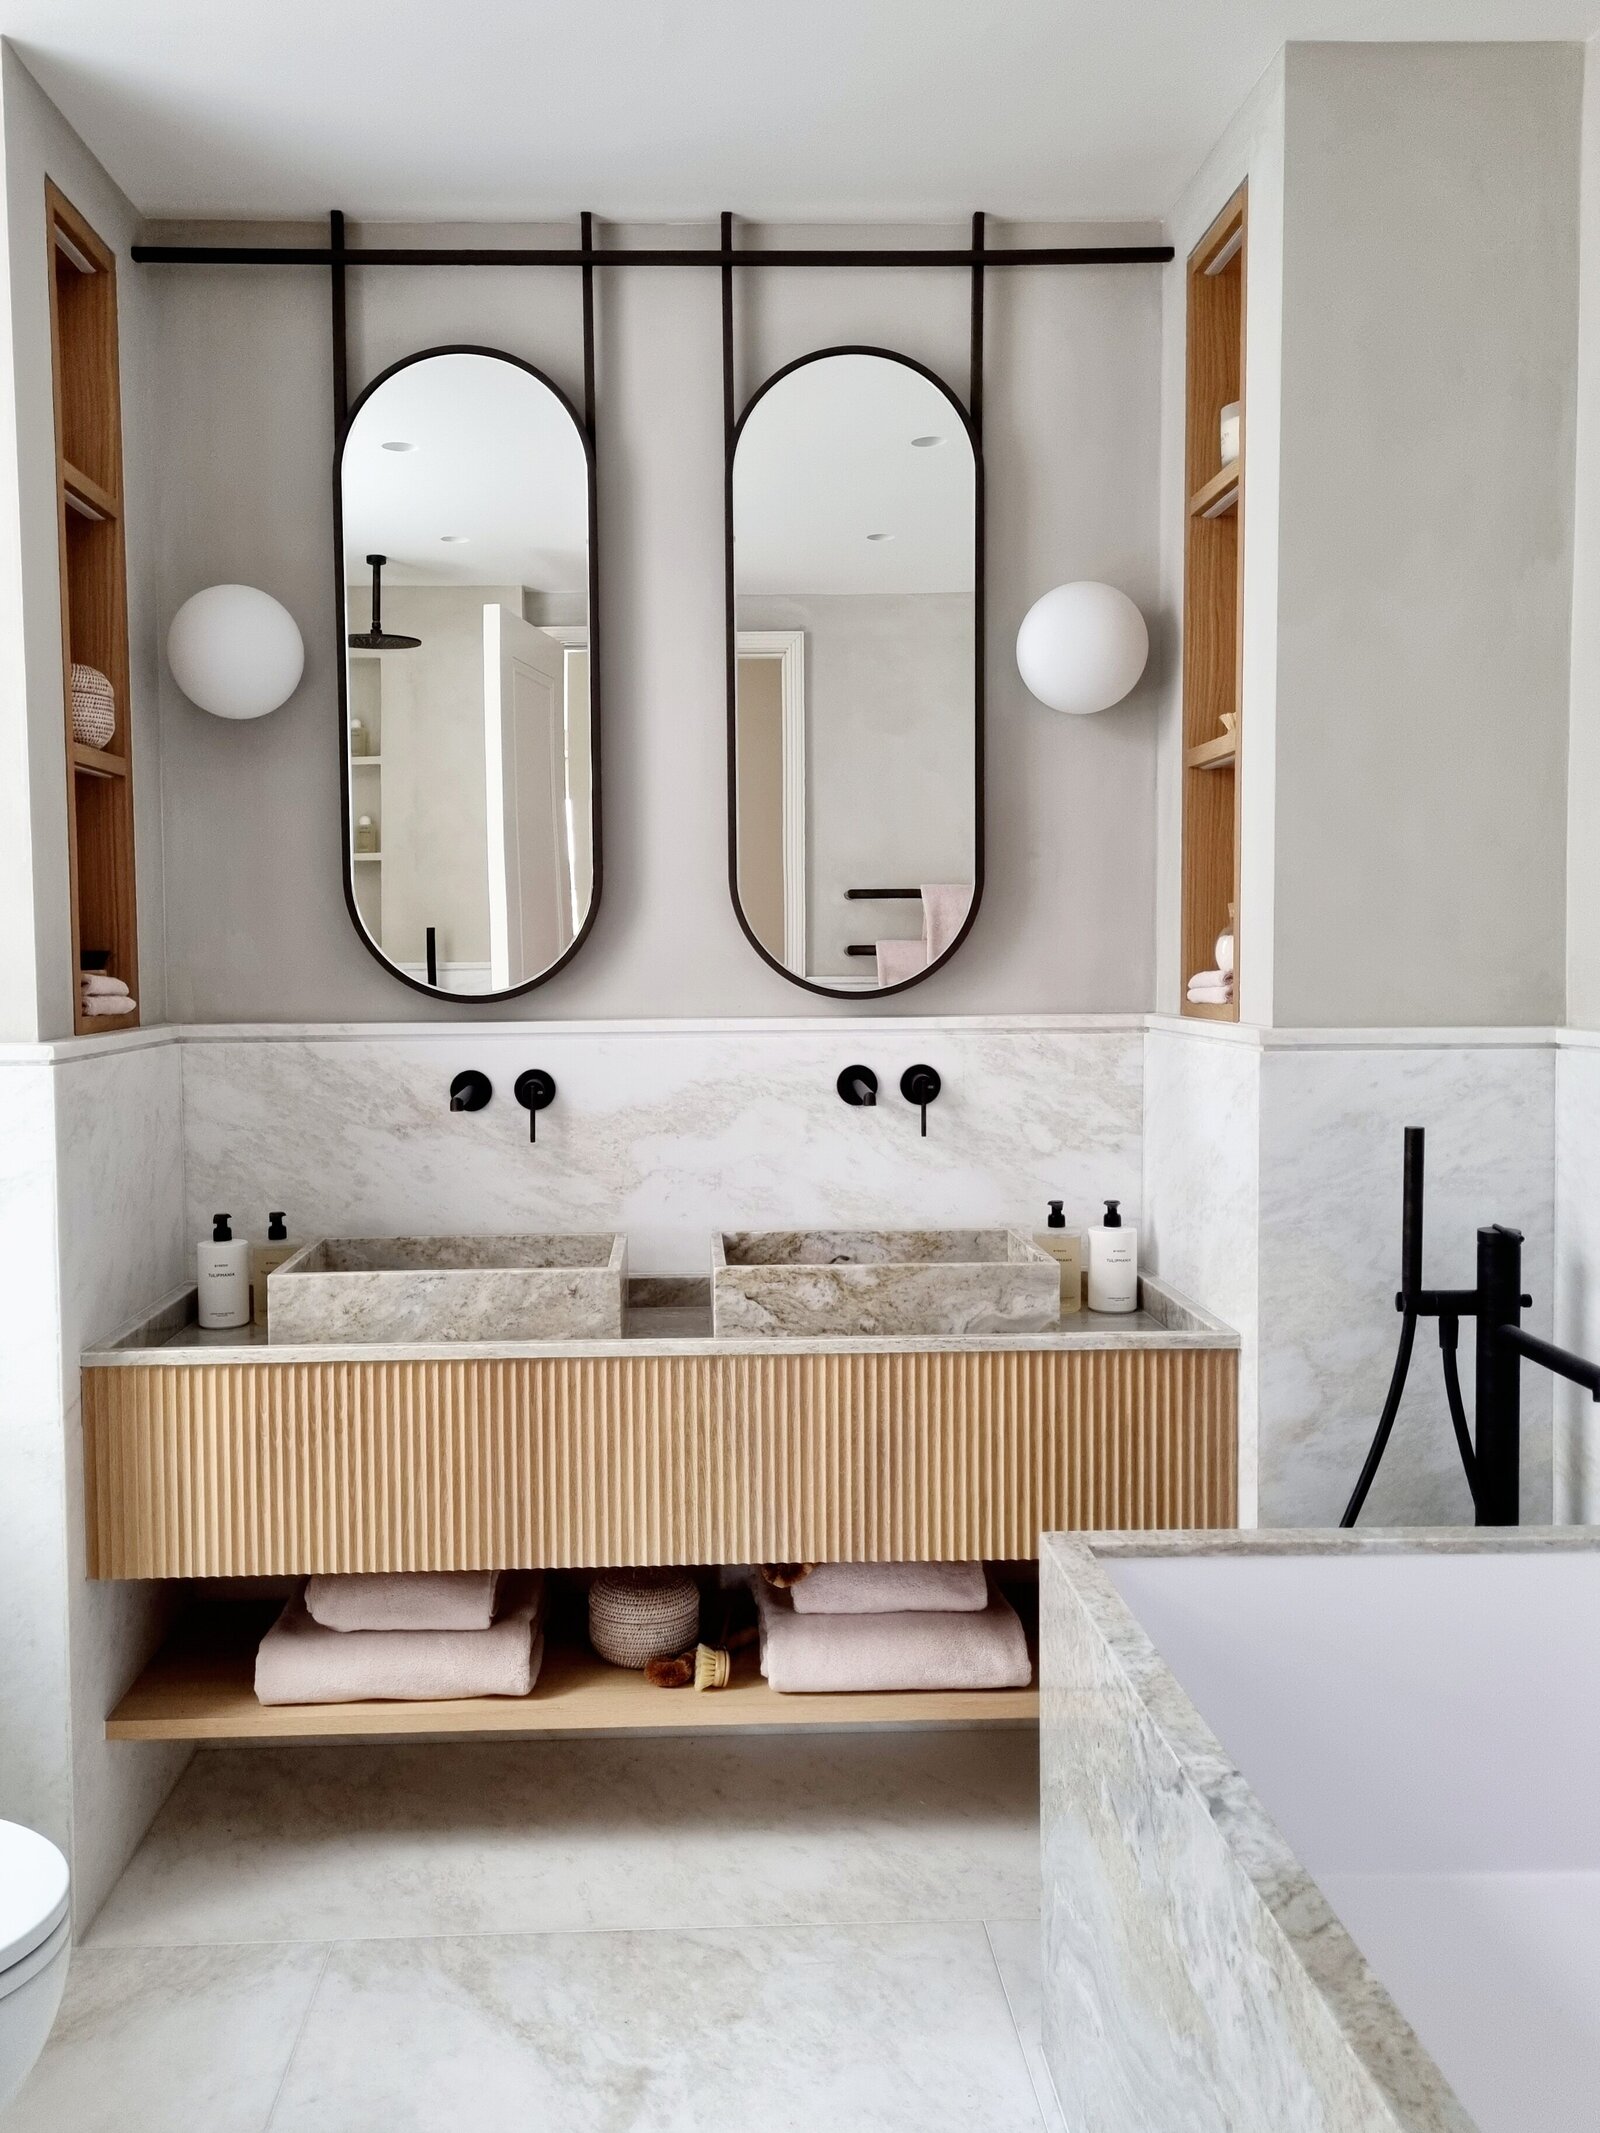 Master bathroom with double vanity